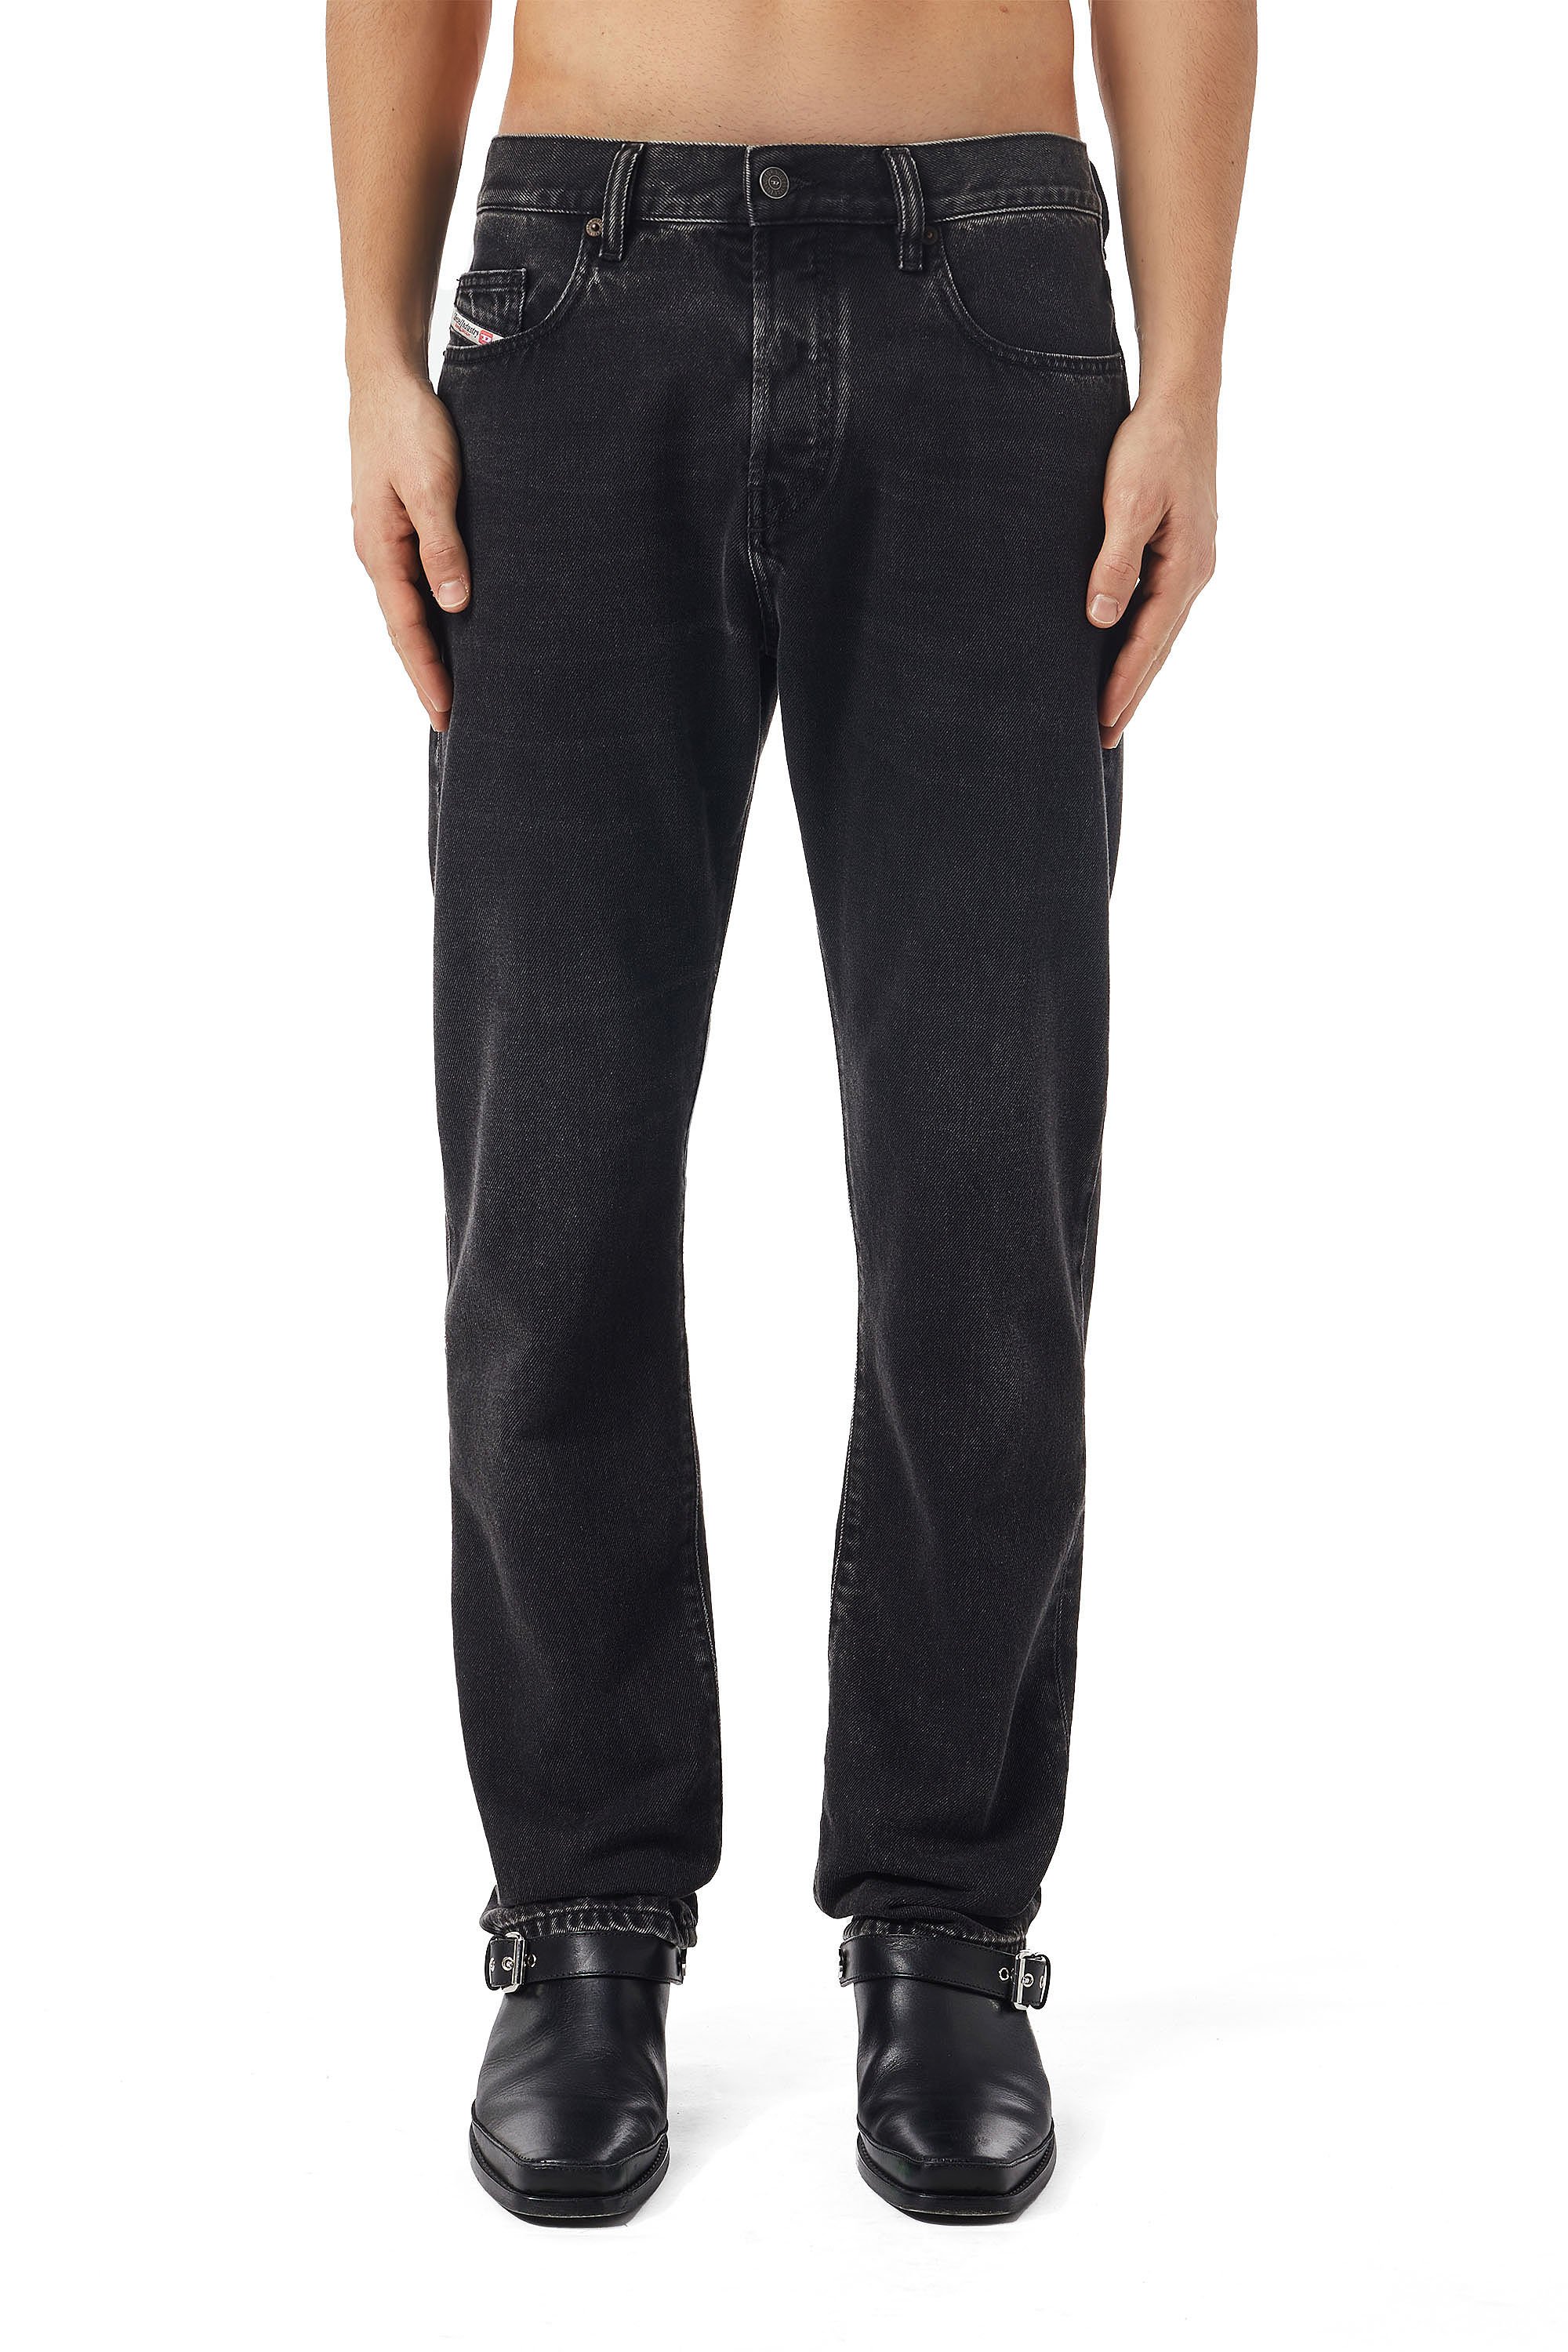 2020 D-VIKER 09B88 Straight Jeans, Black/Dark grey - Jeans